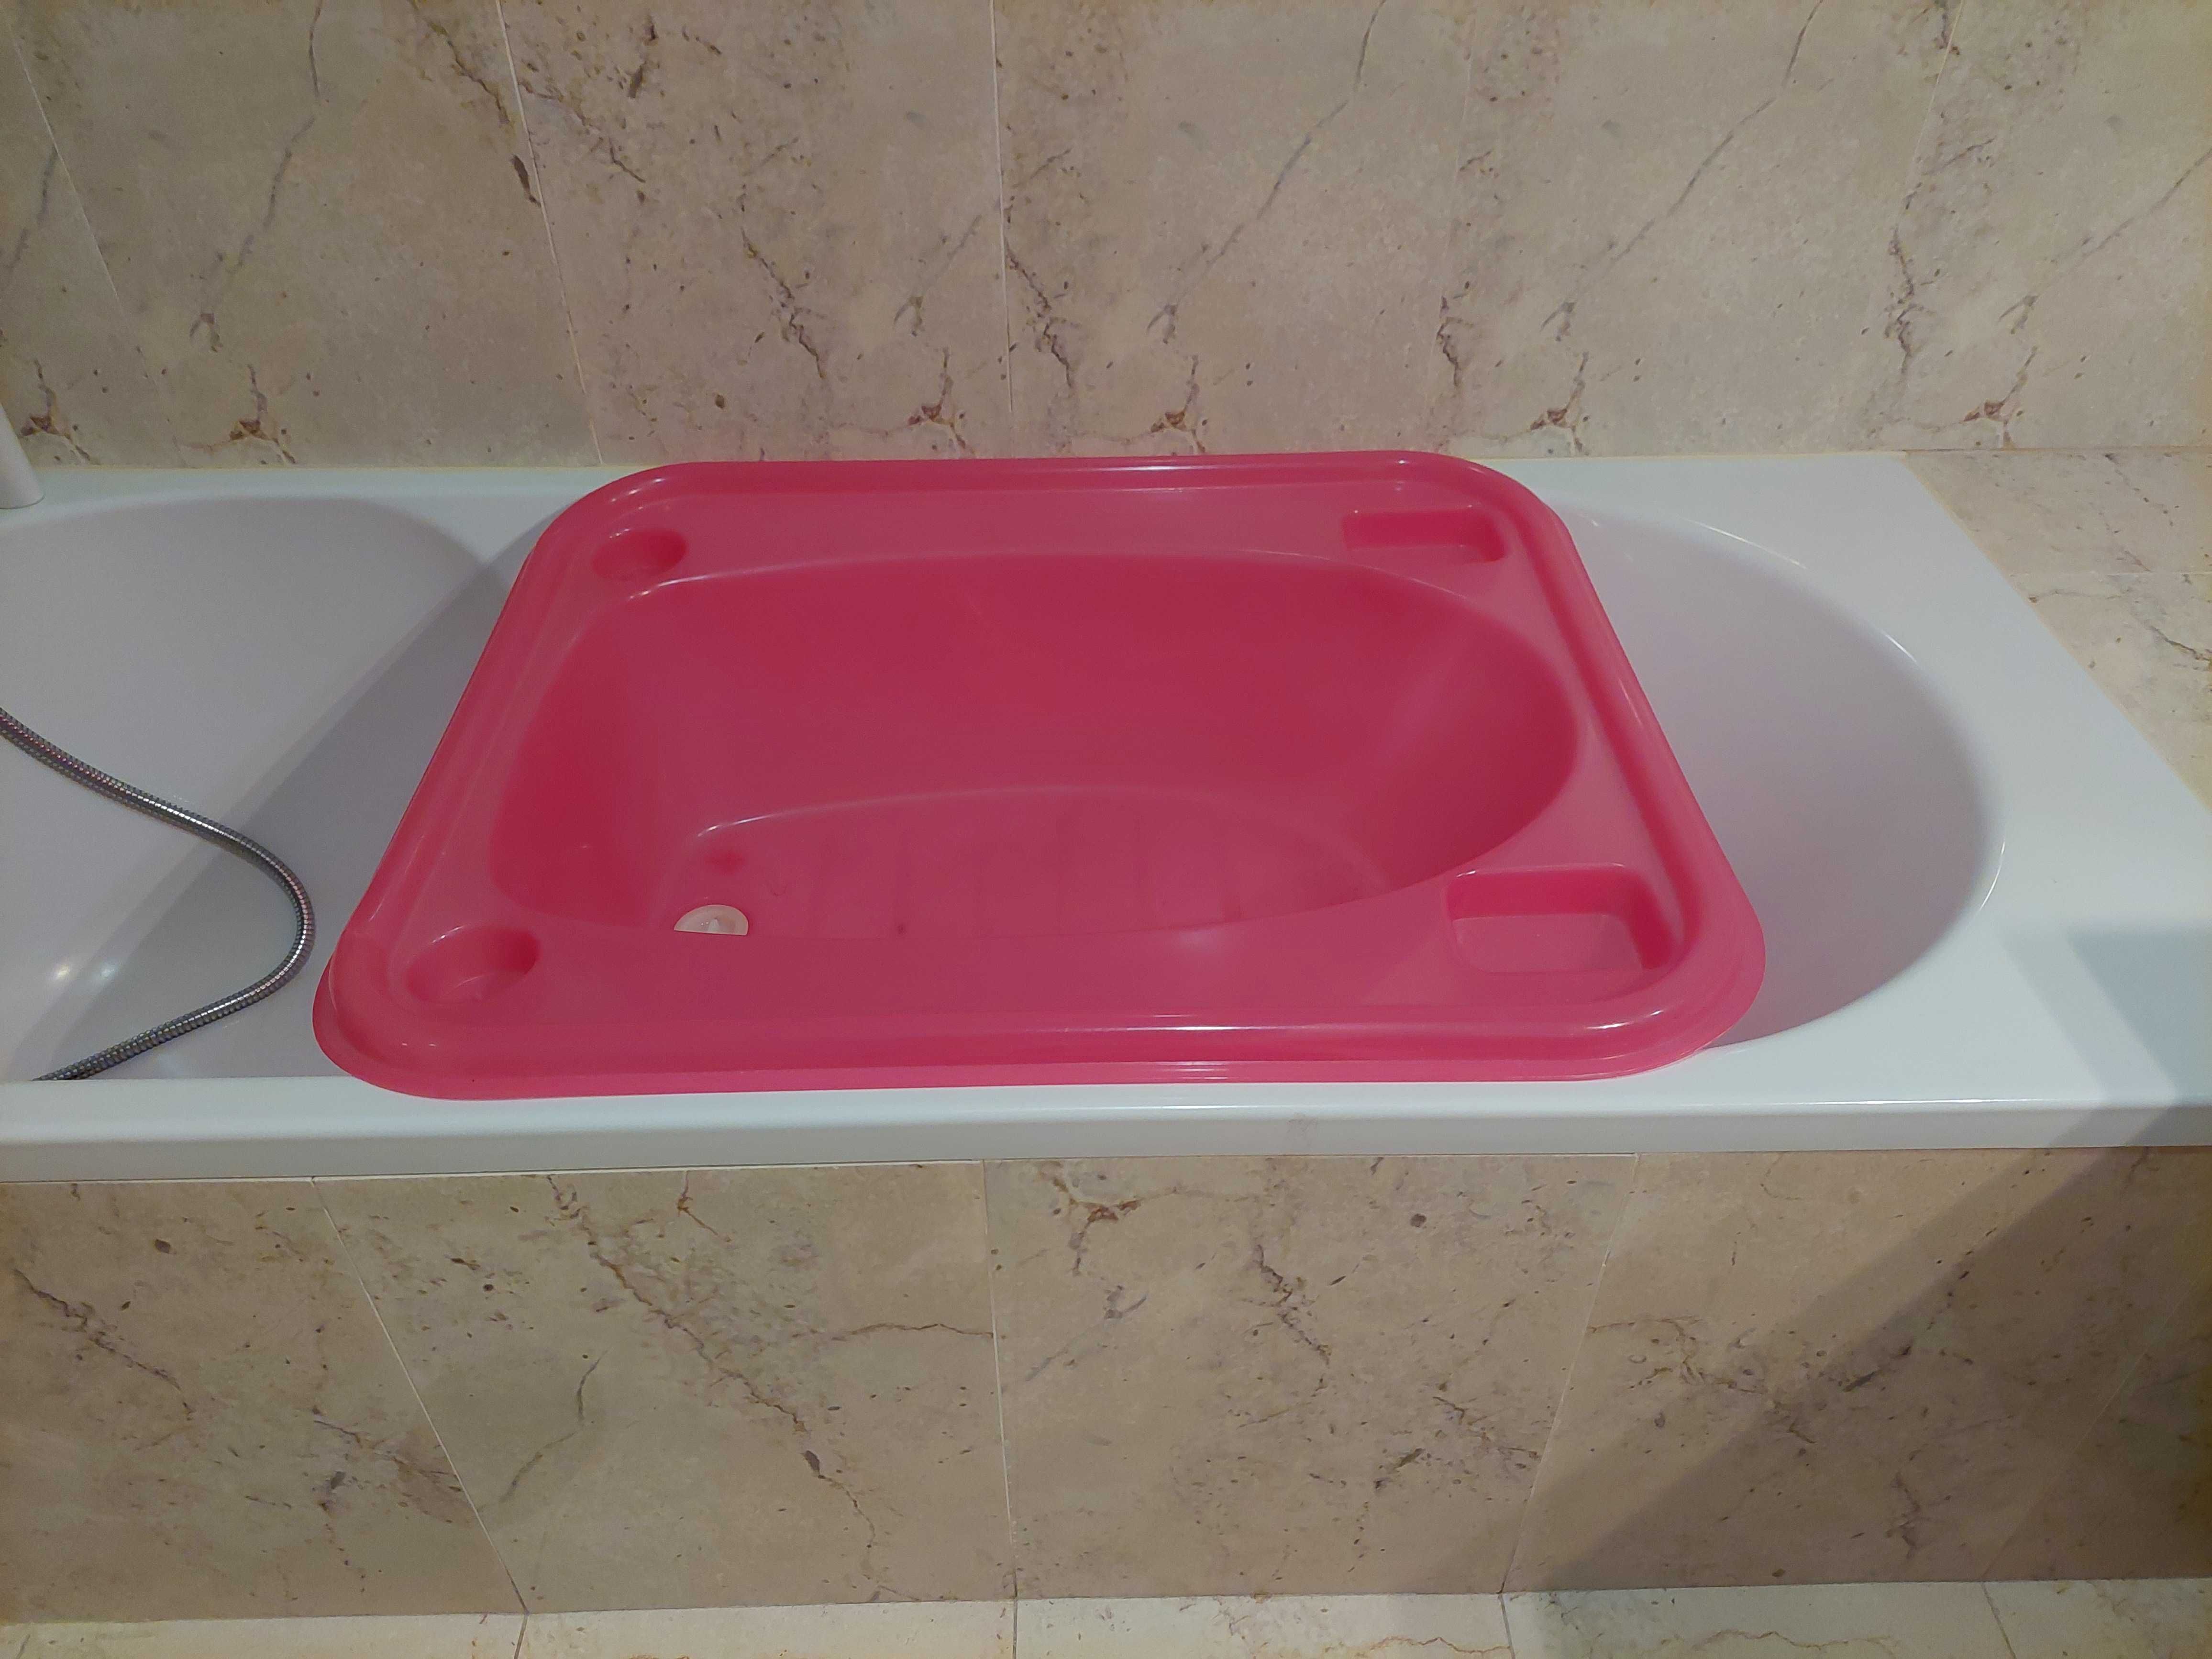 Banheira cor de rosa